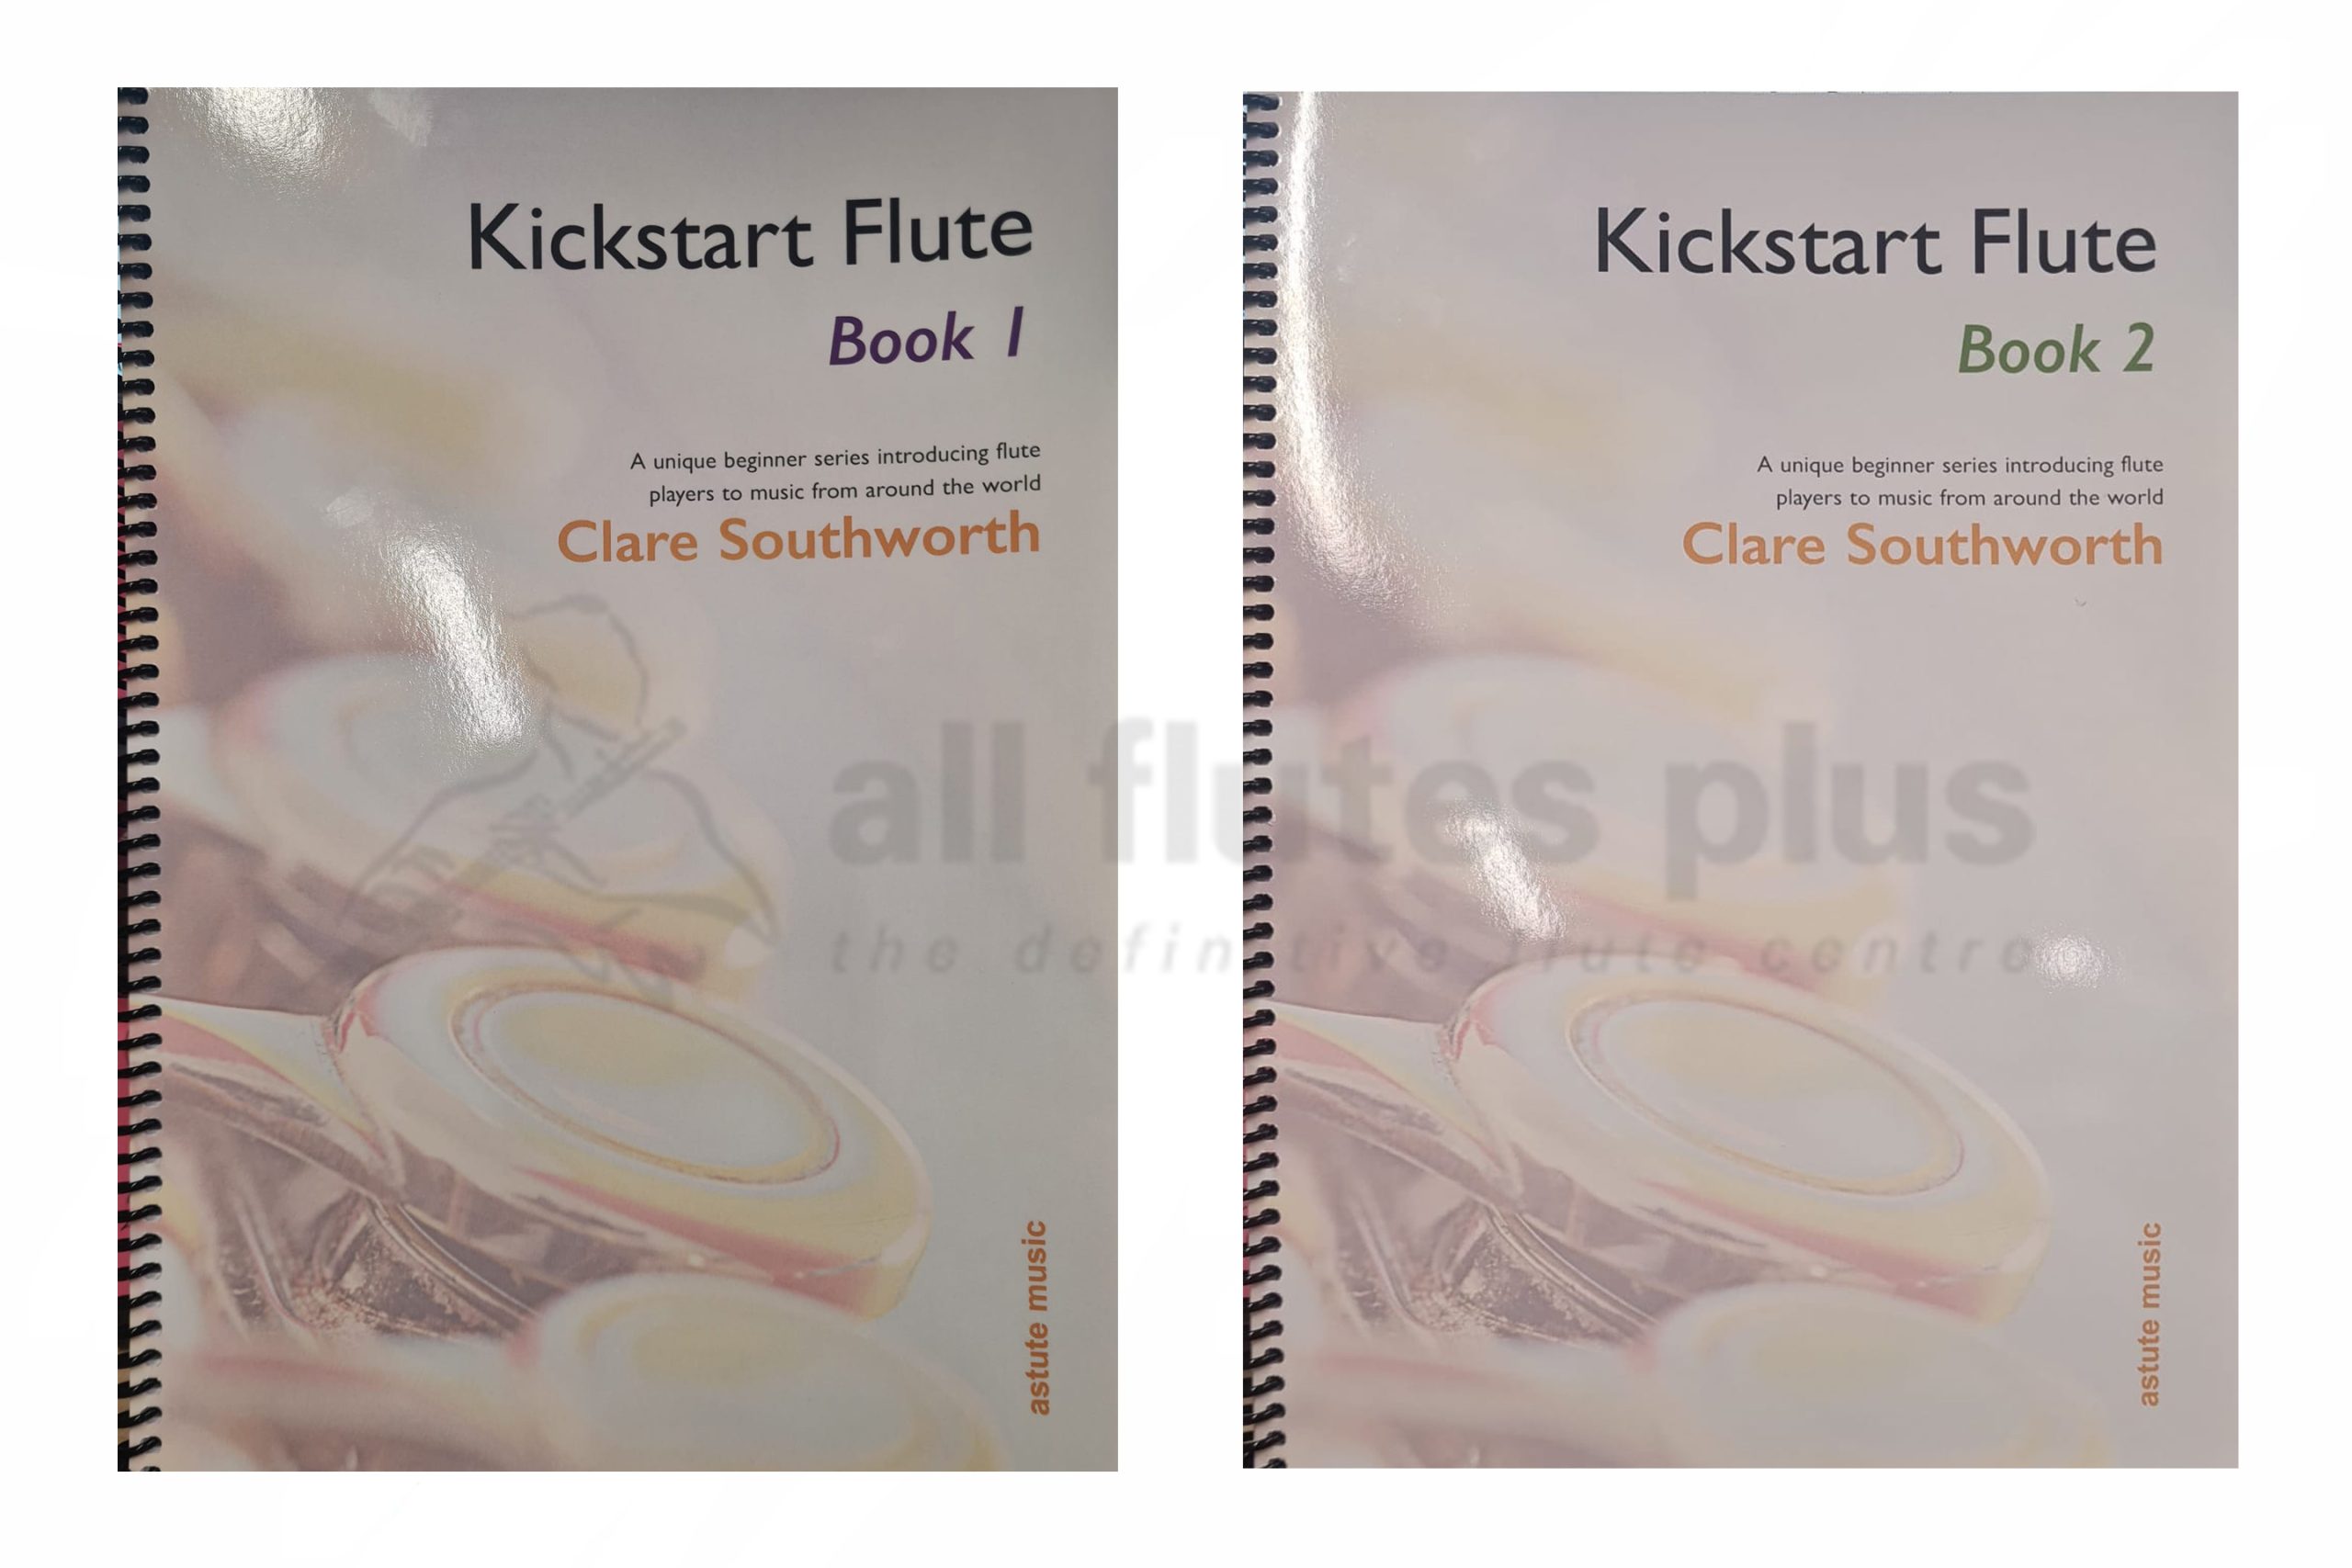 Kickstart Flute by Clare Southworth